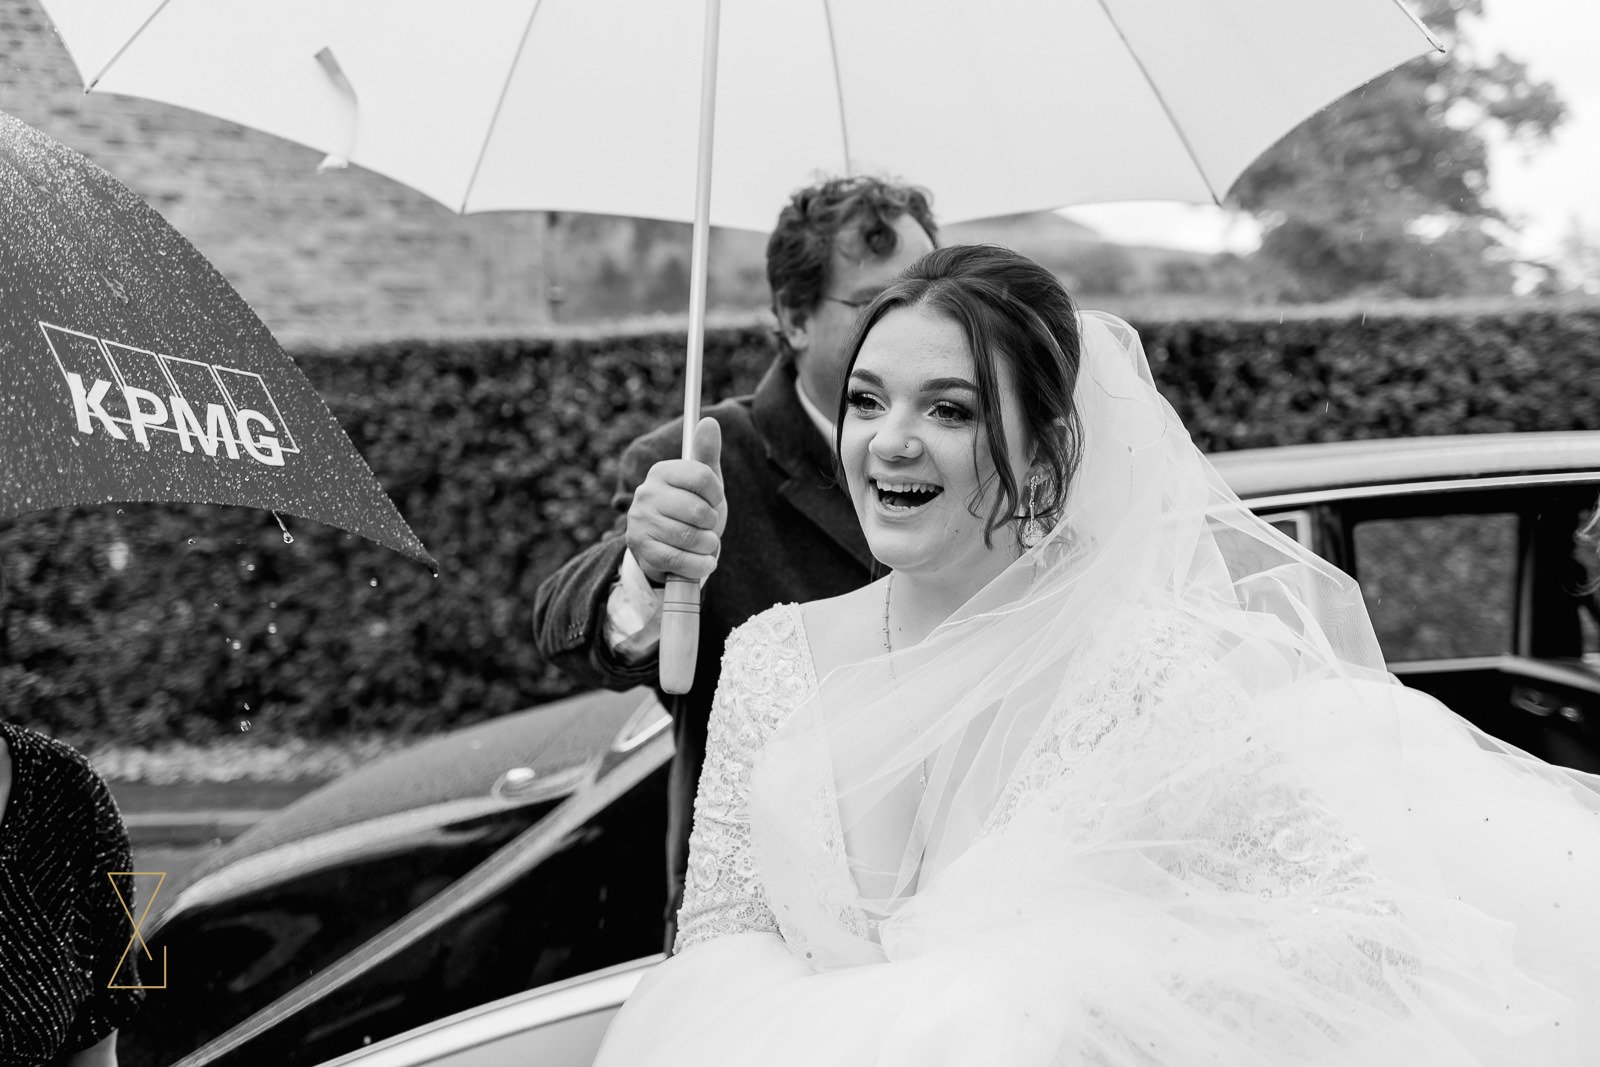 Rain-on-wedding-day-tips-14.jpg